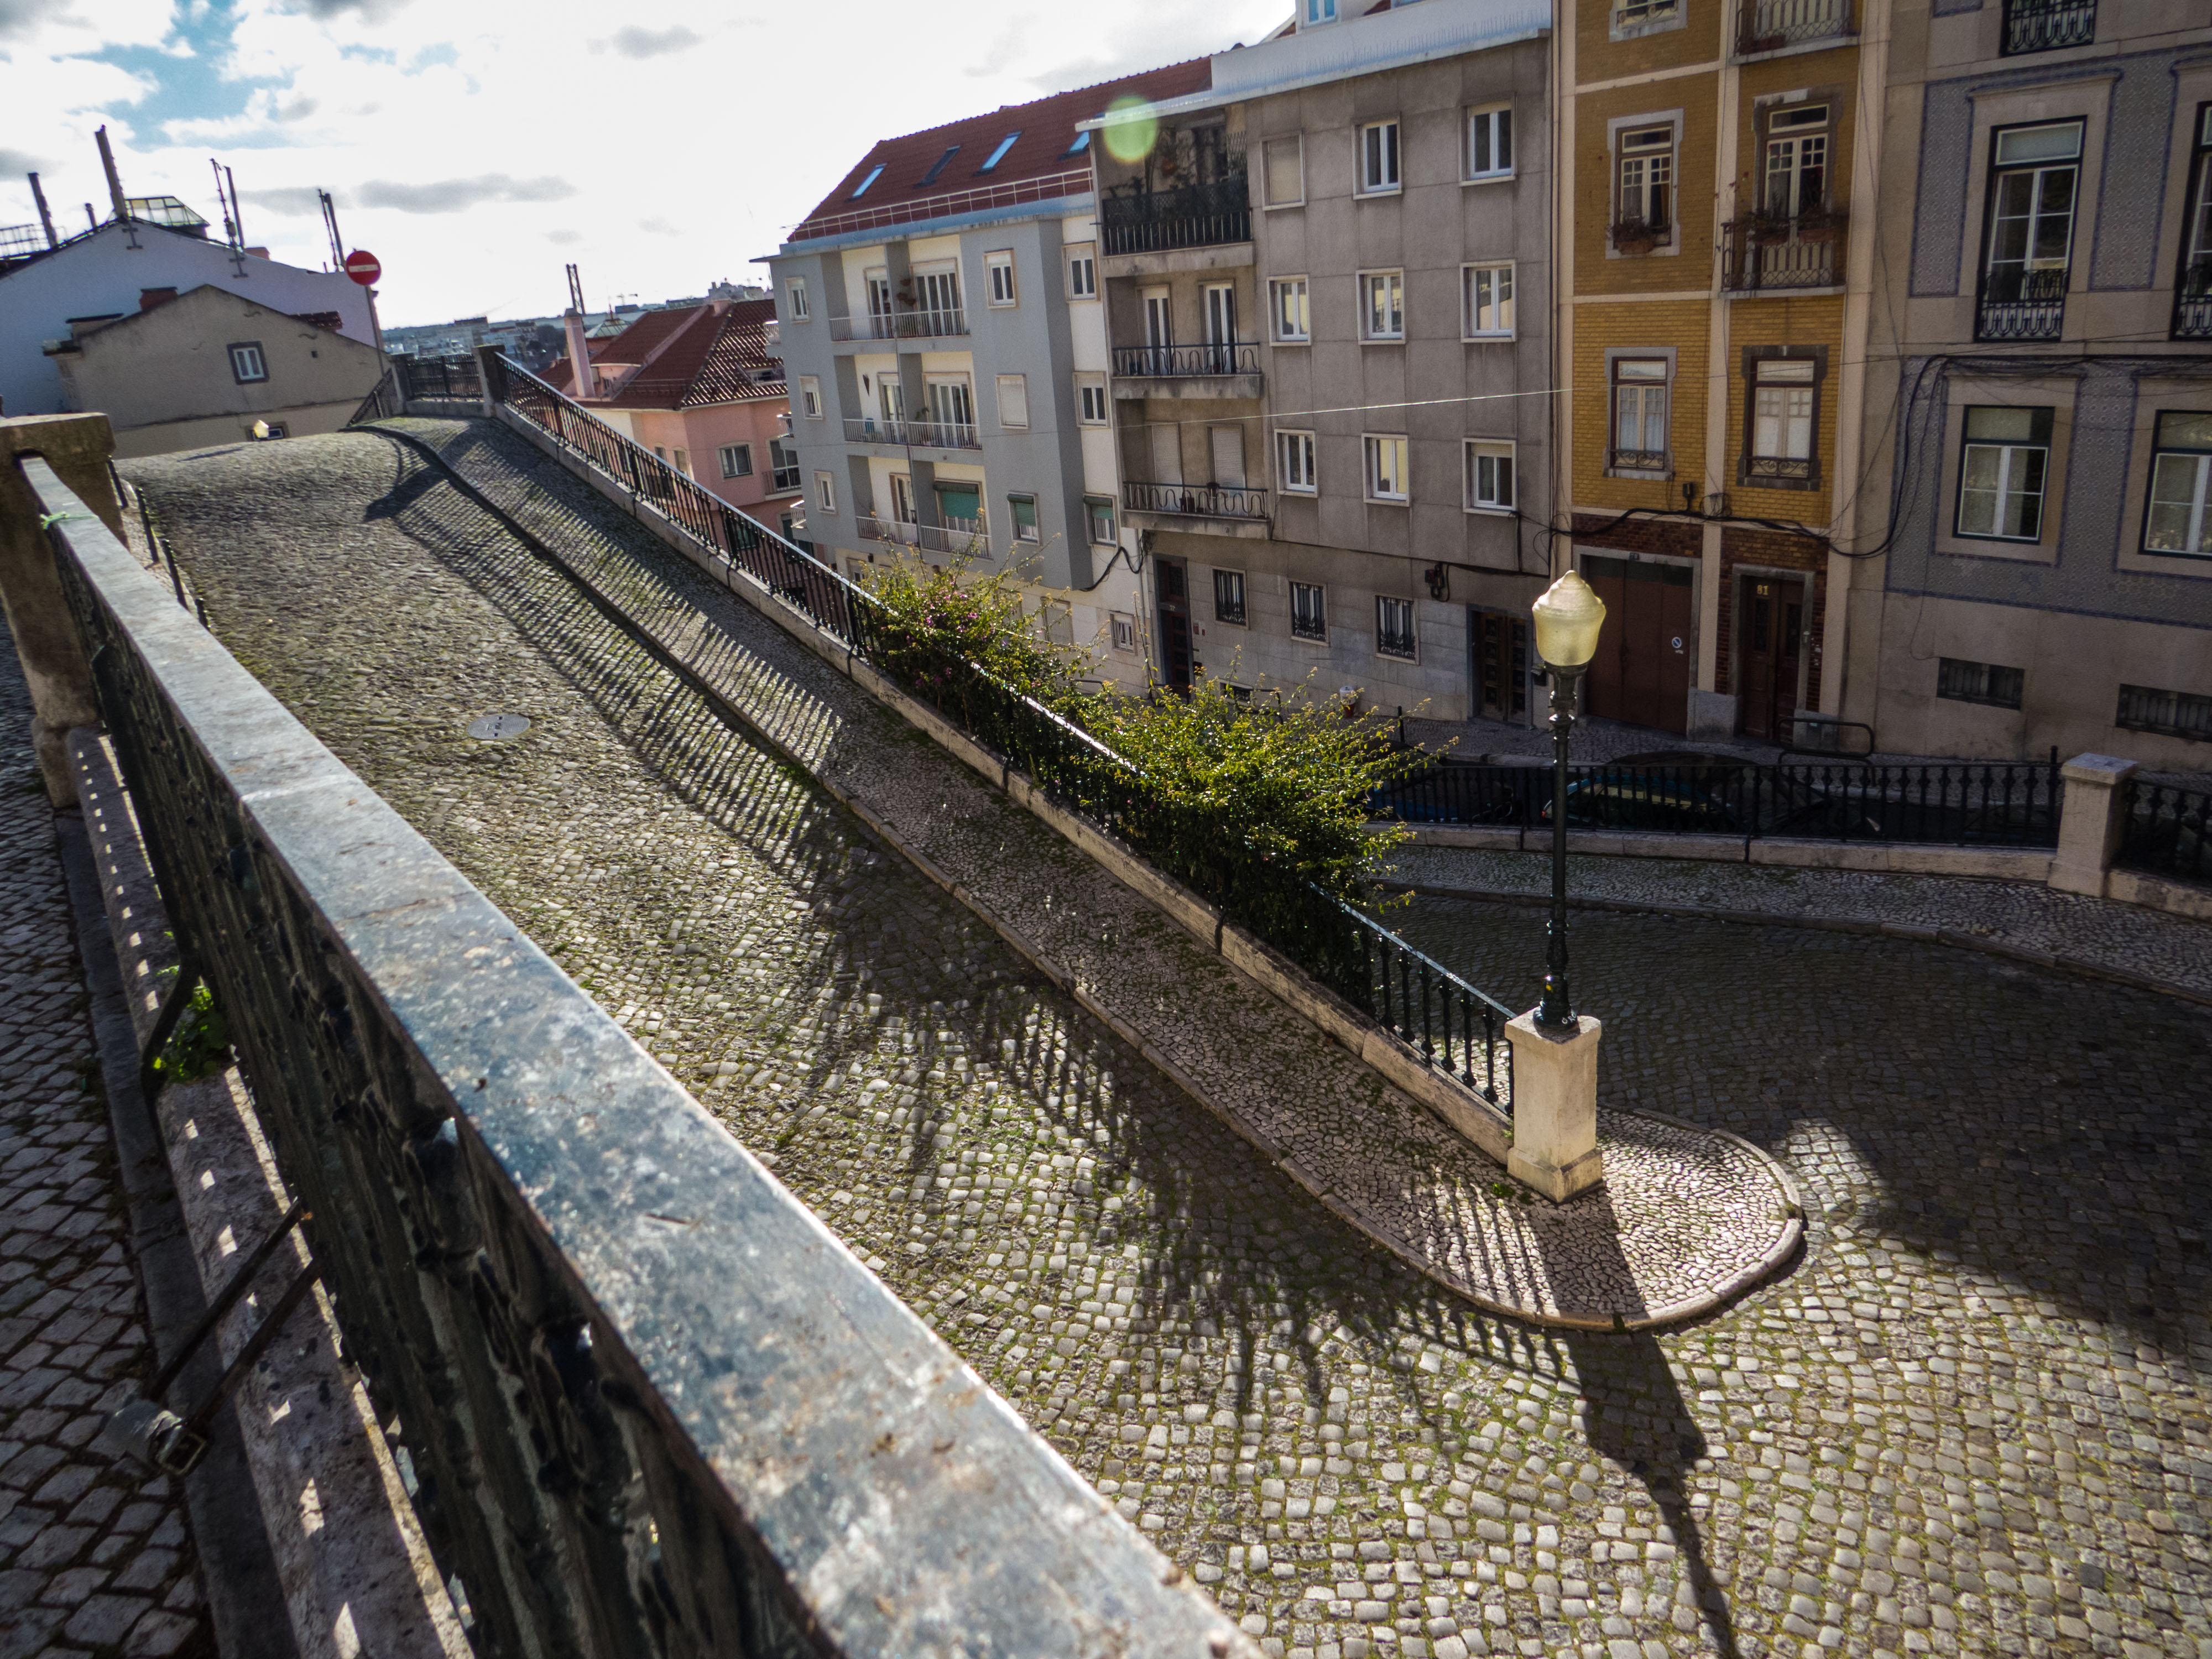 Streets of Lisbon, Architecture, Beautiful, Bricks, City, HQ Photo